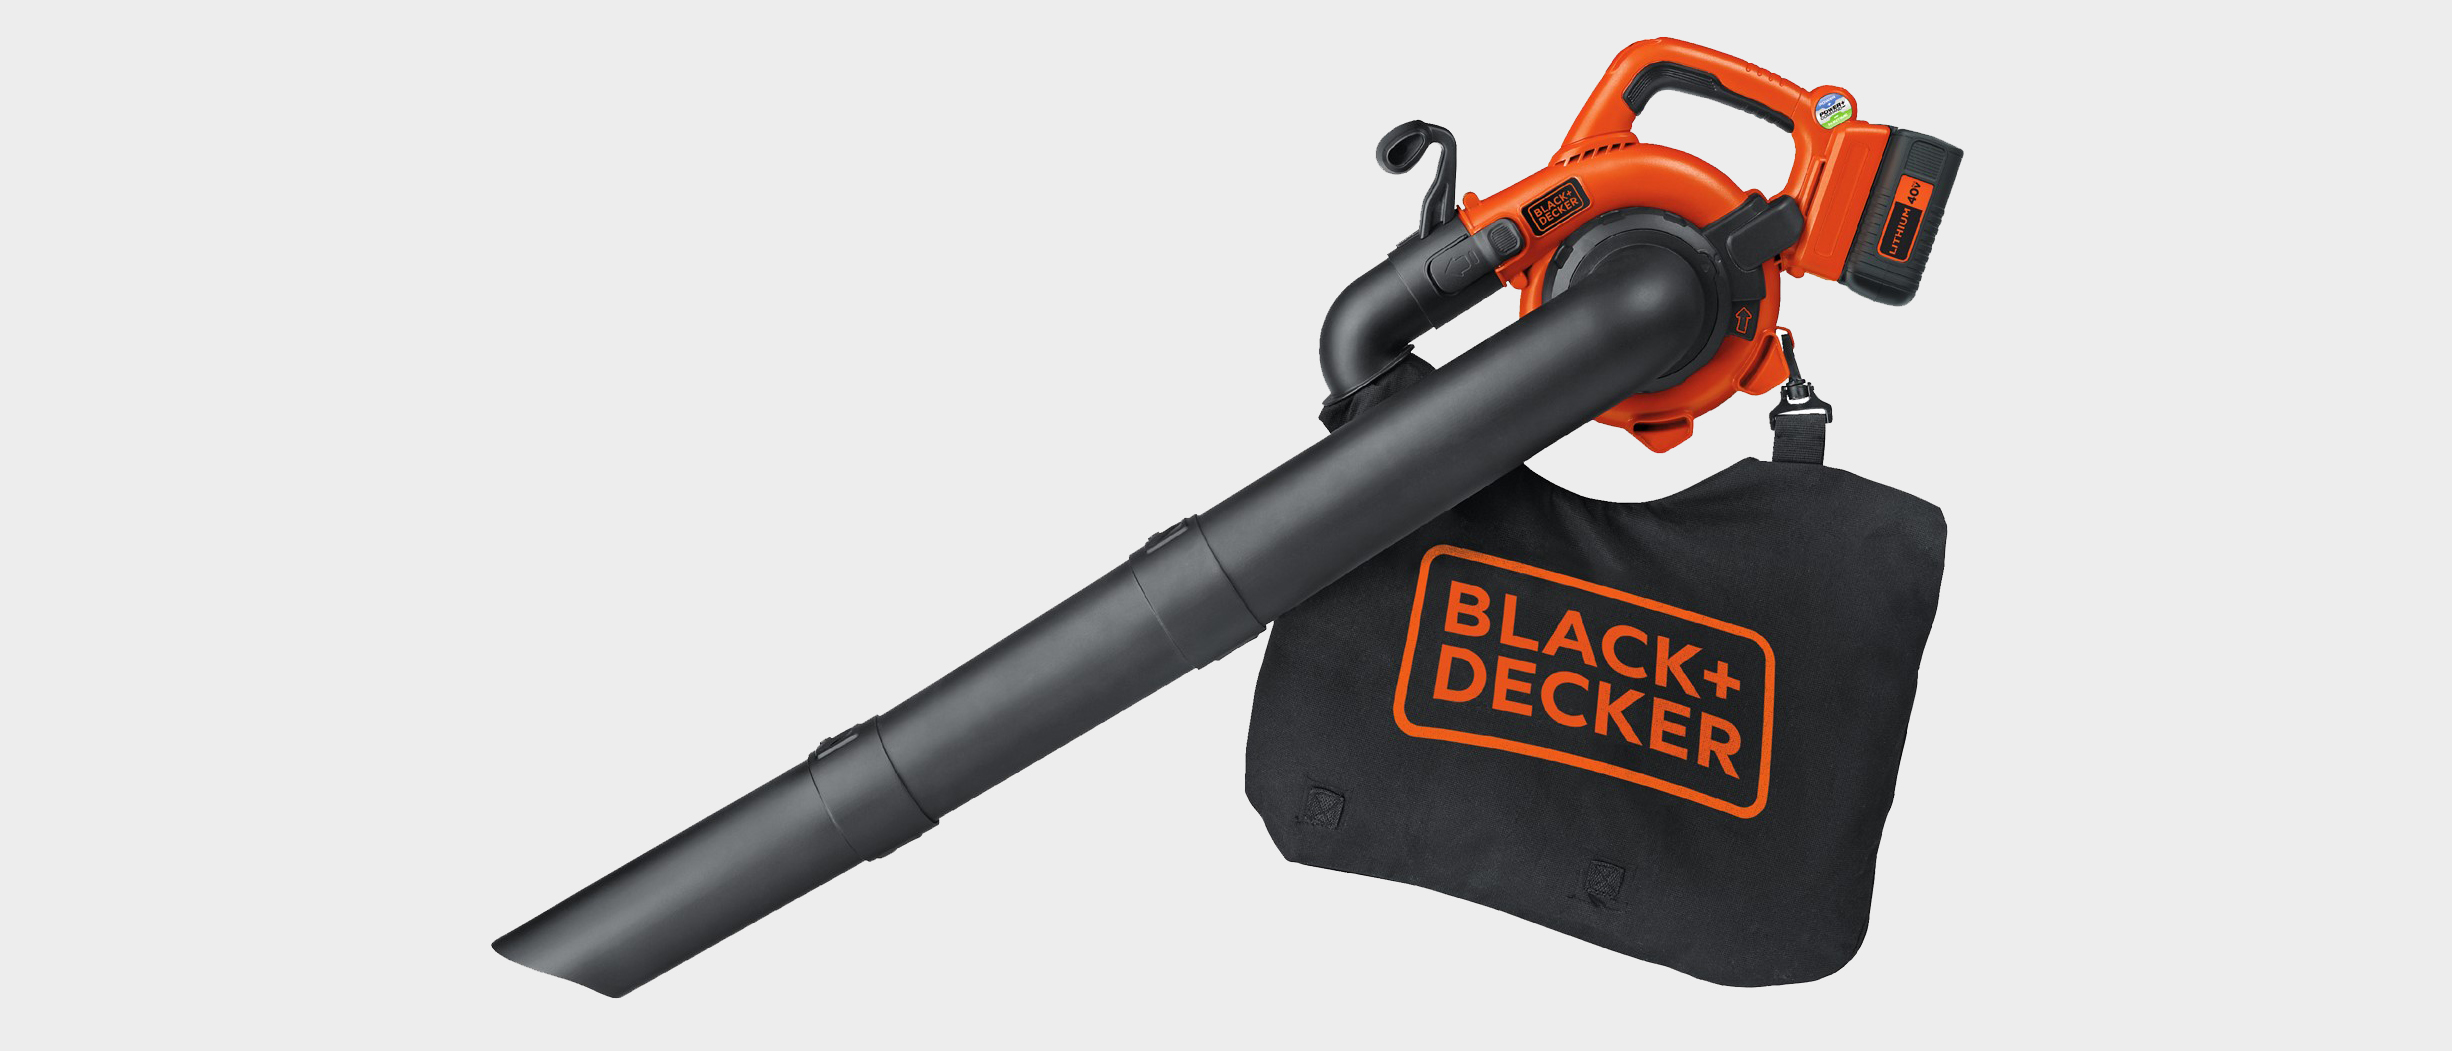 Electric Leaf Blower Review - BLACK + DECKER Corded Leaf Blower